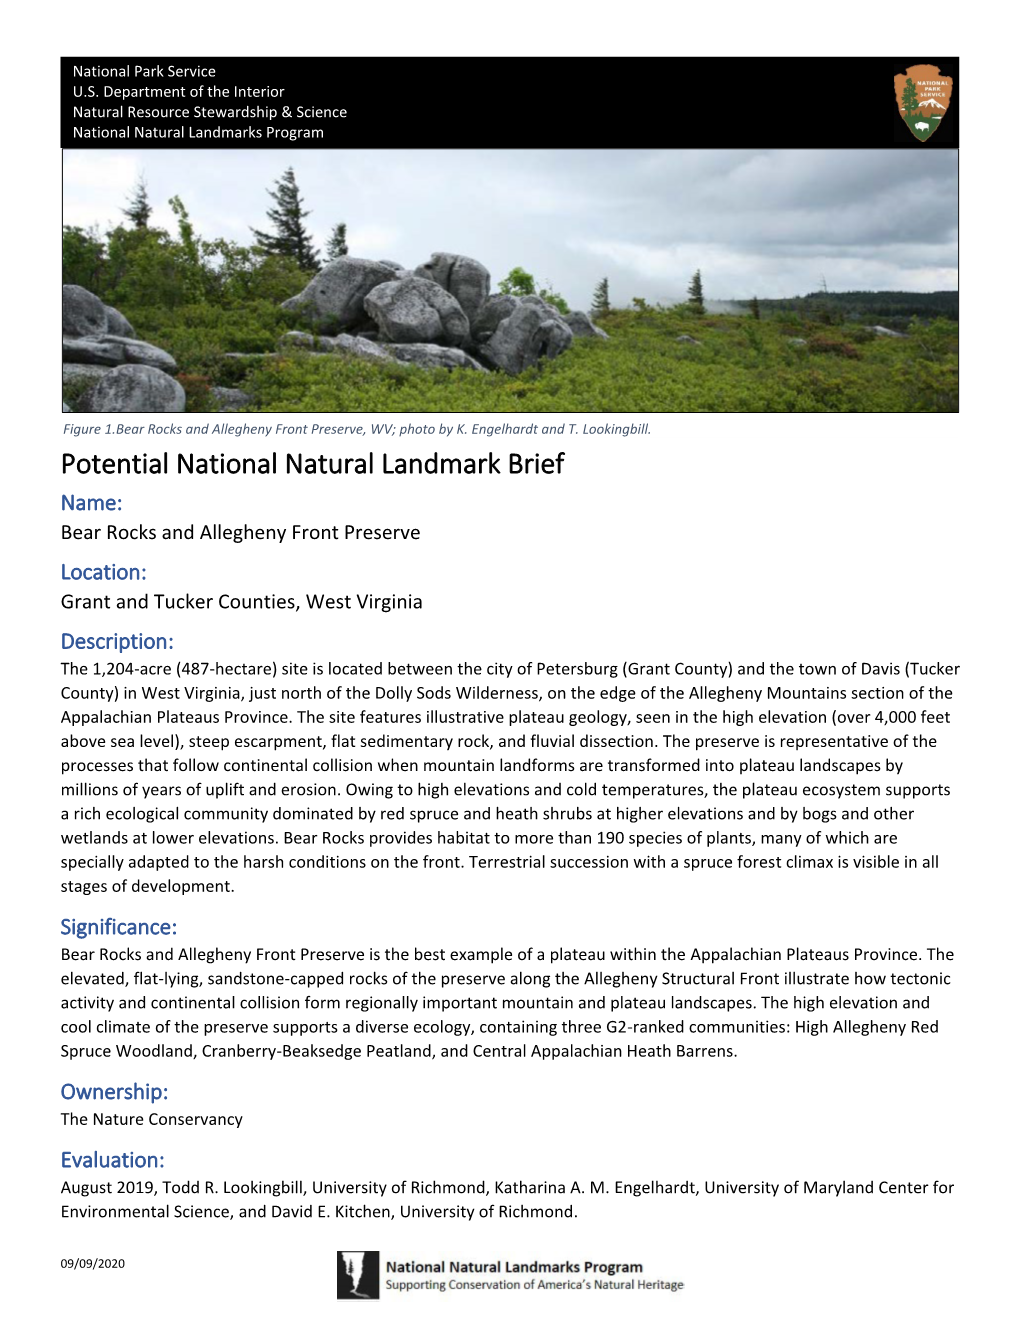 Potential National Natural Landmark Brief